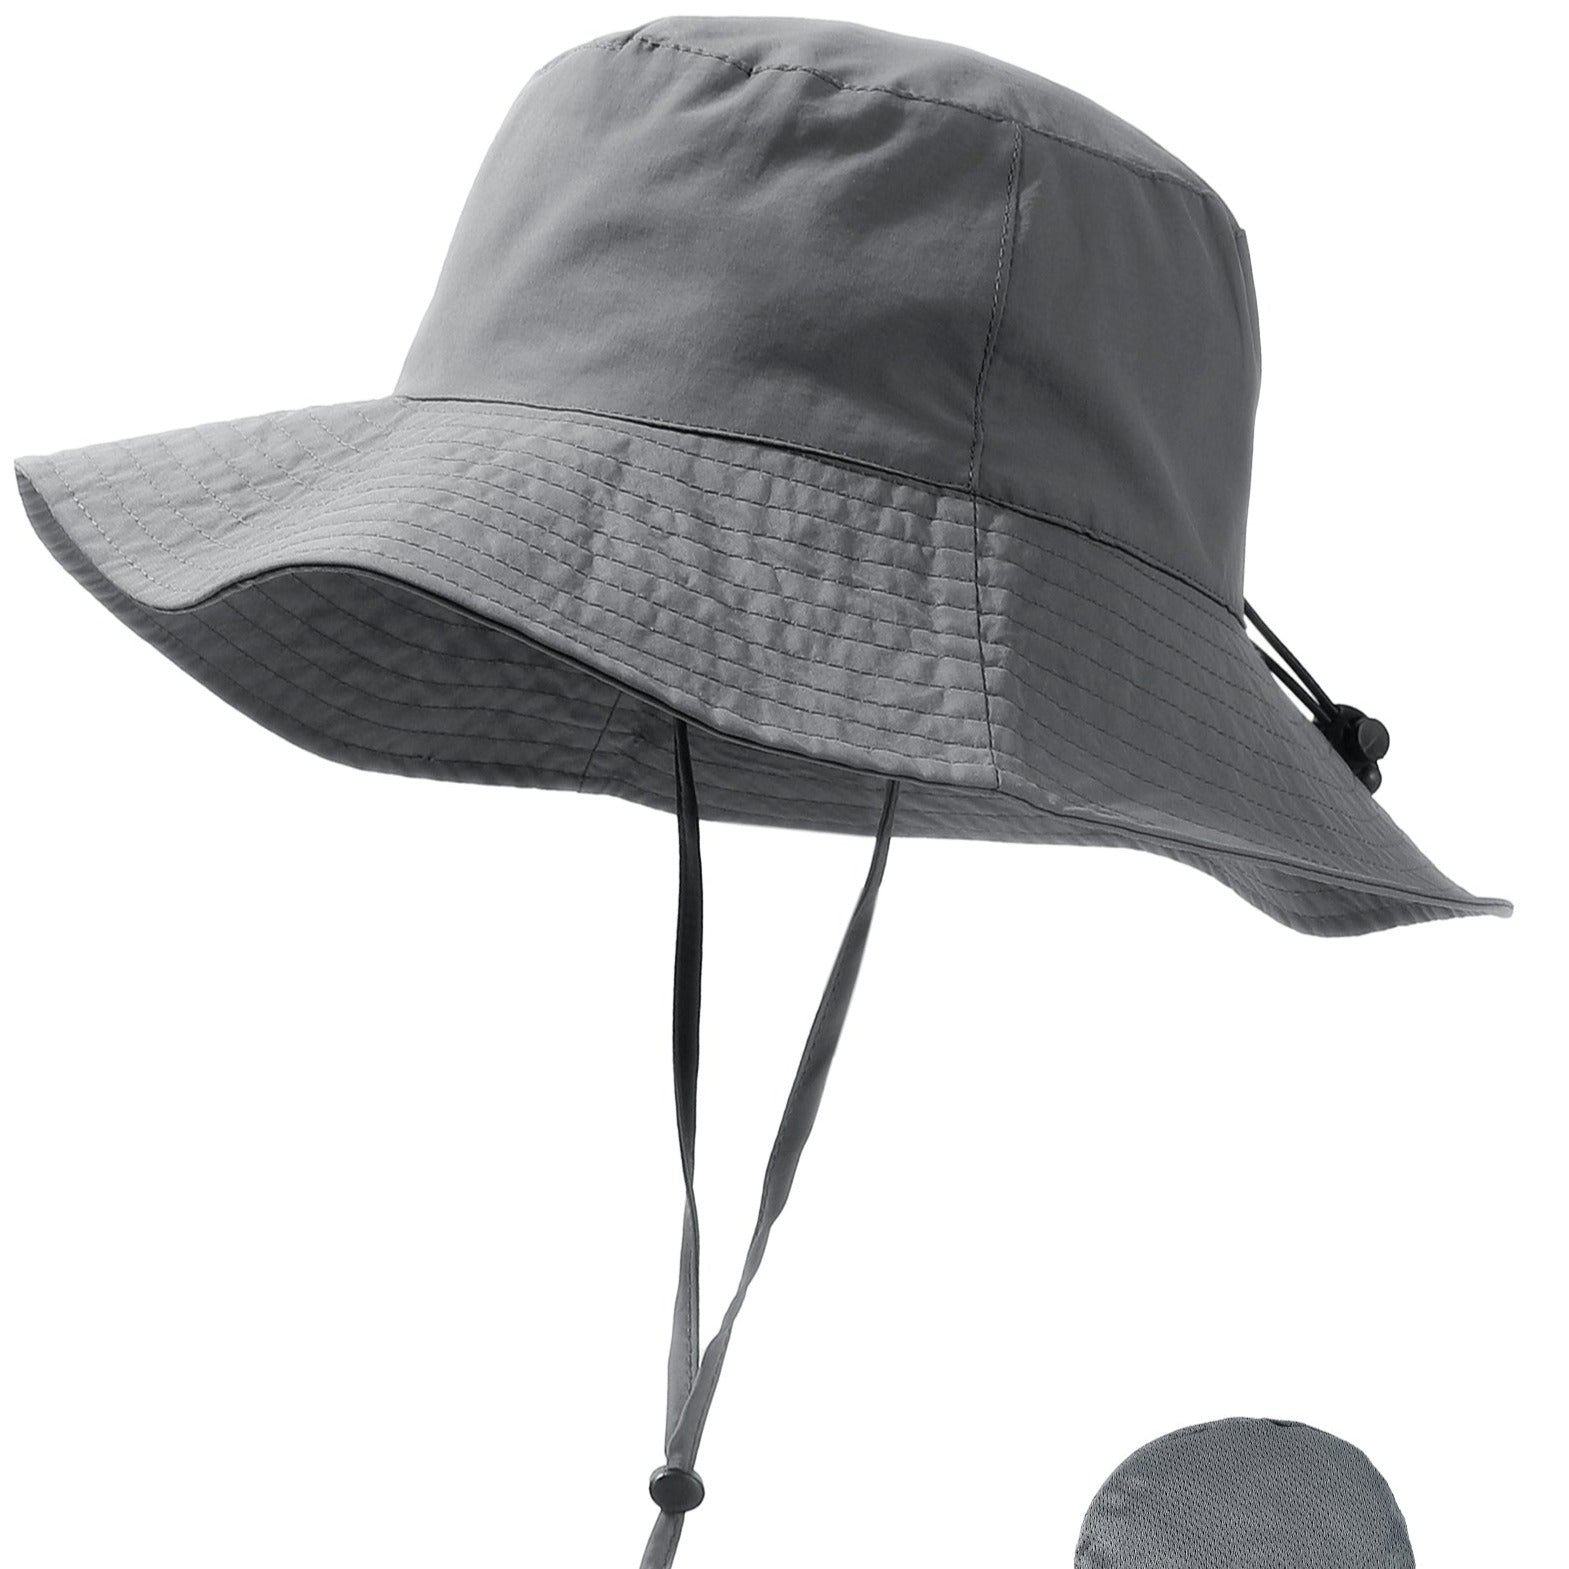 Wmcaps Sun Hats for Men Women, UPF 50+ Wide Brim Waterproof Boonie Bucket  Hat for Fishing, Hiking, Garden, Safari, Outdoor Light Grey